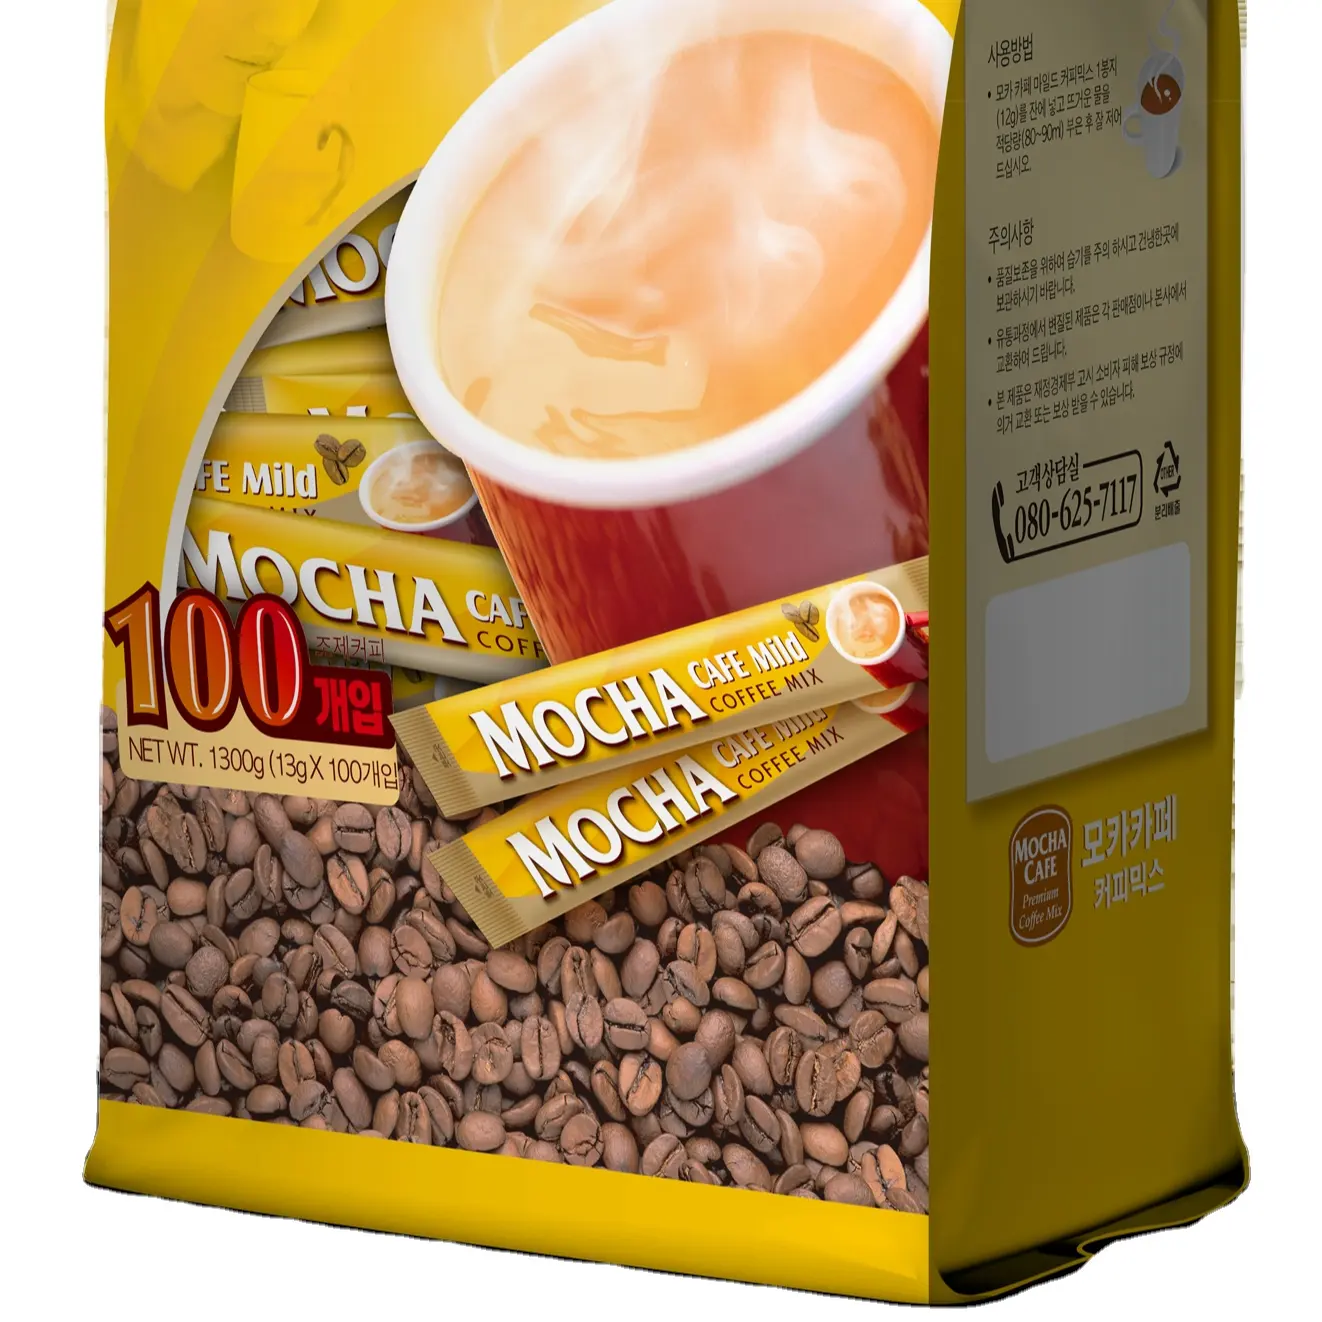 (MochaC&T) mocha cafe mild instant coffee 3 in 1, 1300g (13g x 100 sticks) hazelnut flavor made in Korea Kotra HACCP approved